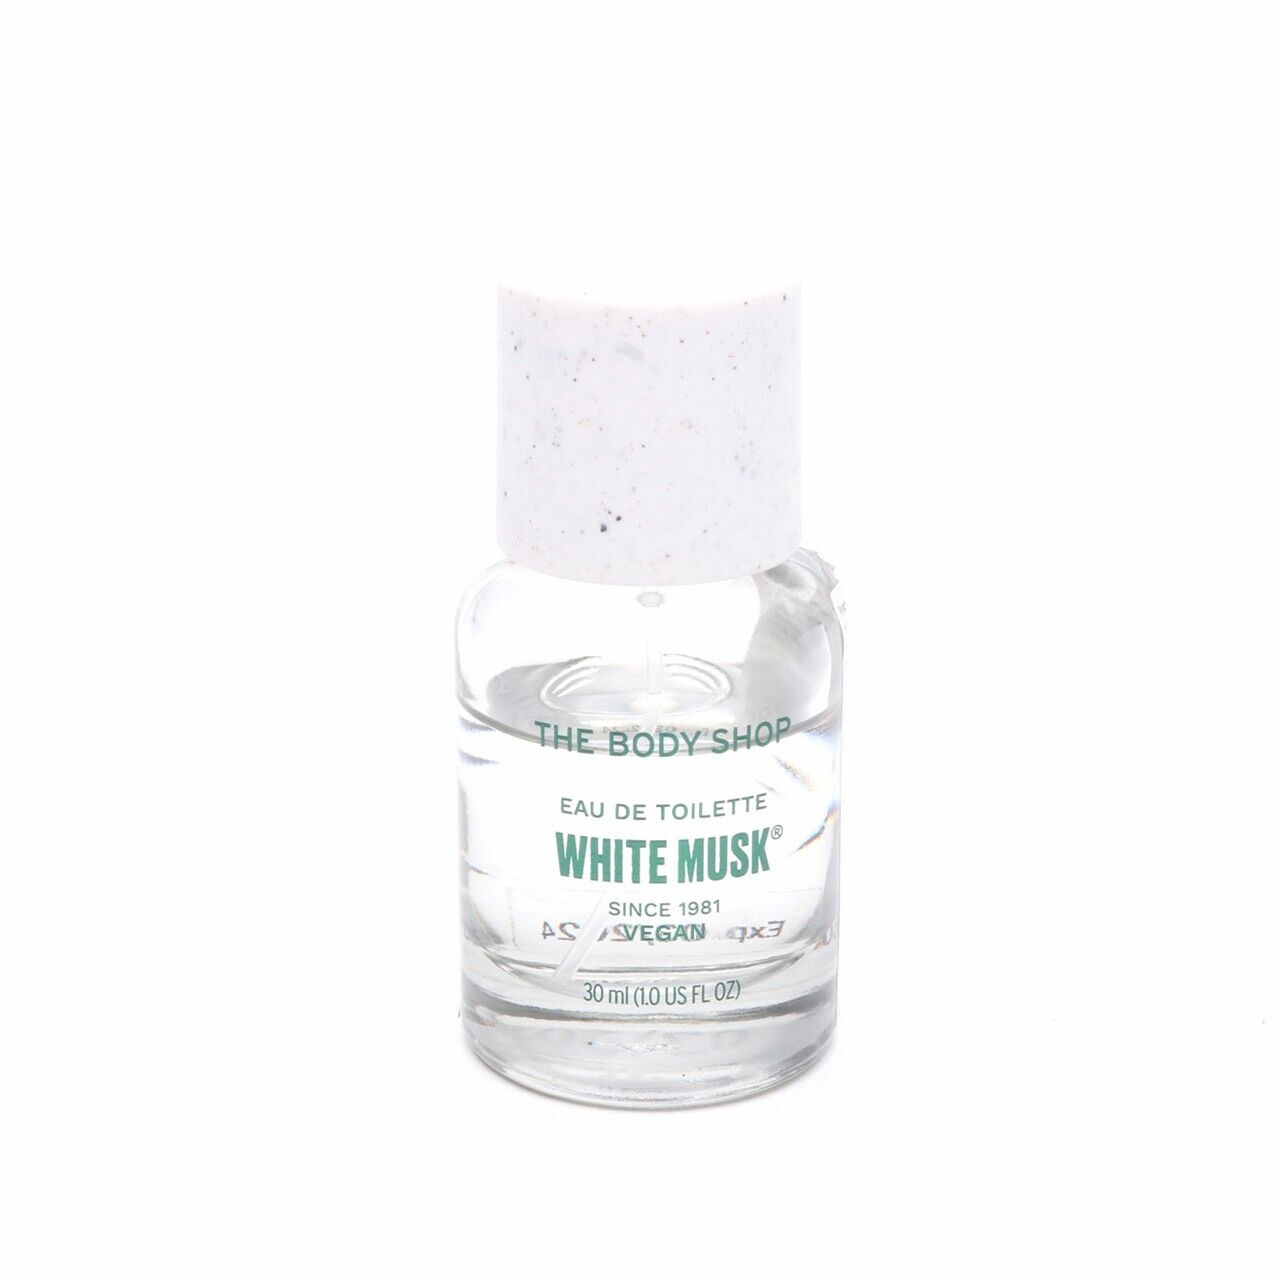 The Body Shop Eau de Toilette White Musk Fragrance